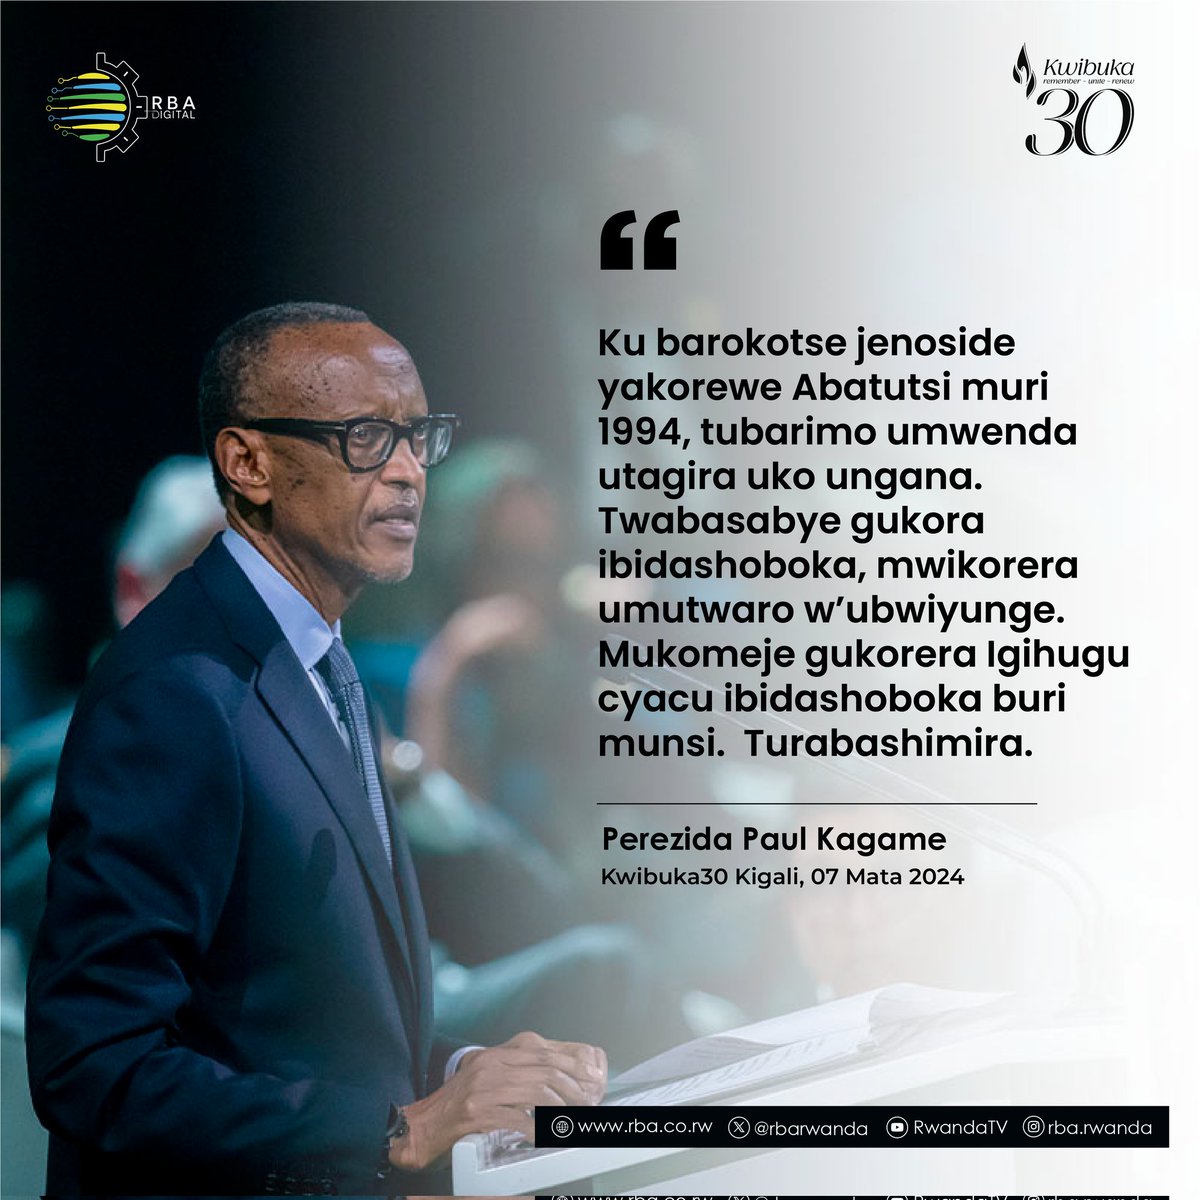 'Ku barokotse jenoside yakorewe Abatutsi muri 1994, tubarimo umwenda utagira uko ungana. Twabasabye gukora ibidashoboka, mwikorera umutwaro w’ubwiyunge. Mukomeje gukorera Igihugu cyacu ibidashoboka buri munsi. Turabashimira.' - Perezida Kagame